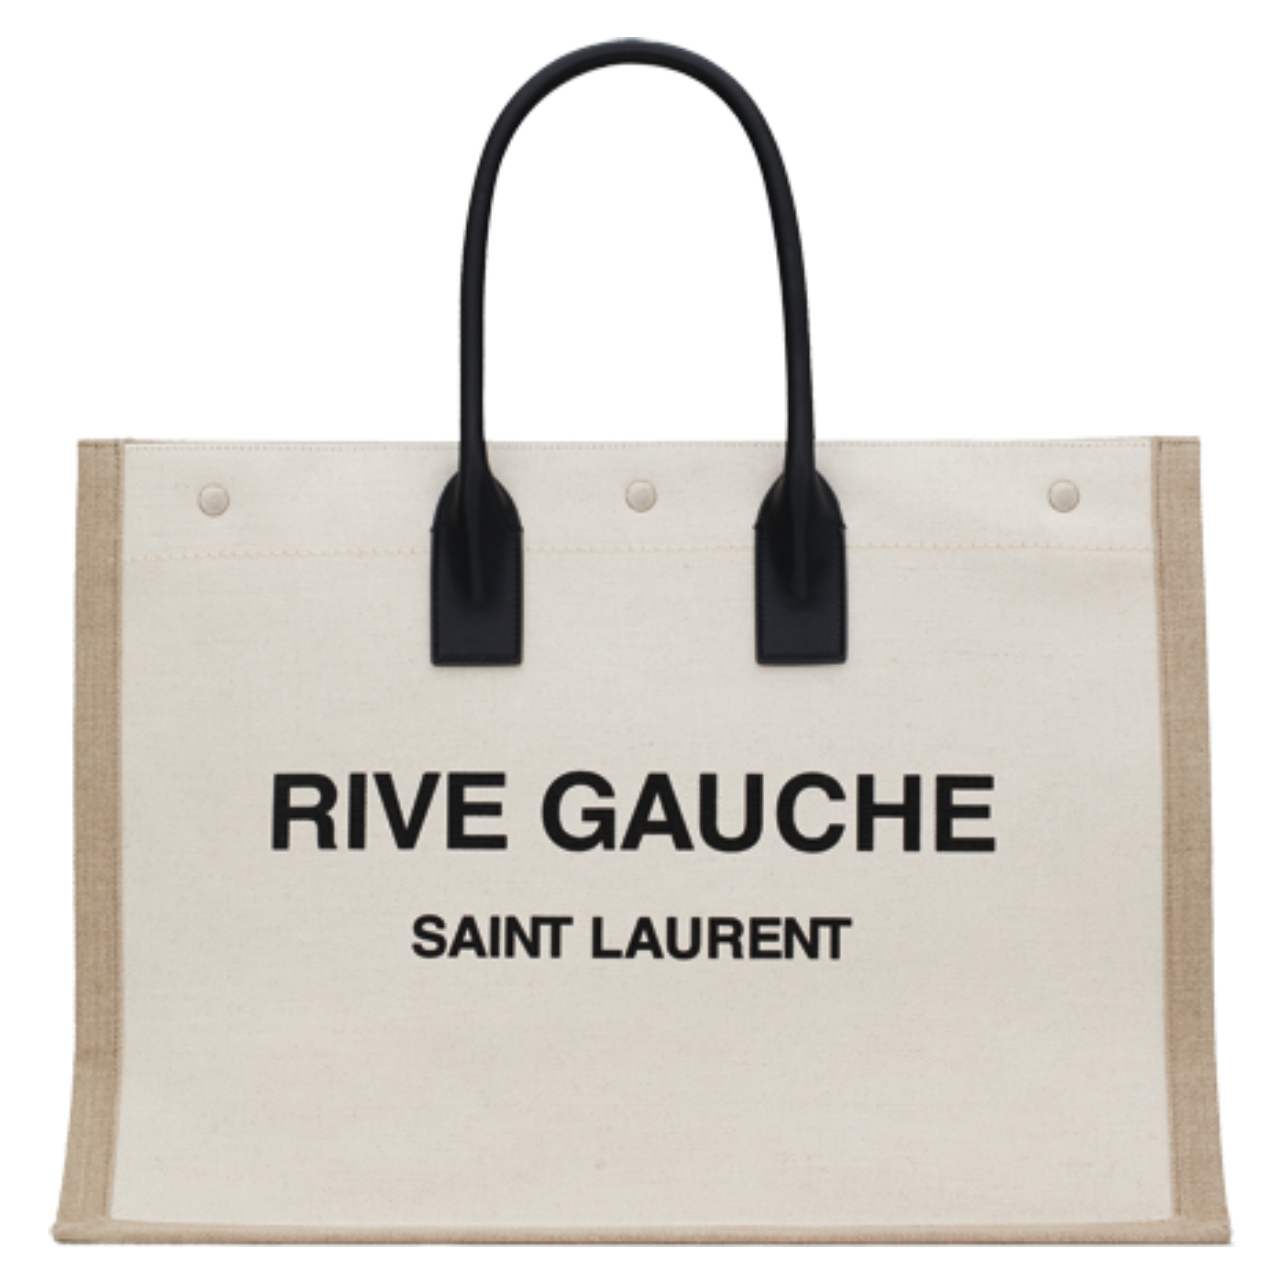 Saint Laurent canvas tote with Rive Gauche Saint Laurent embossing in black